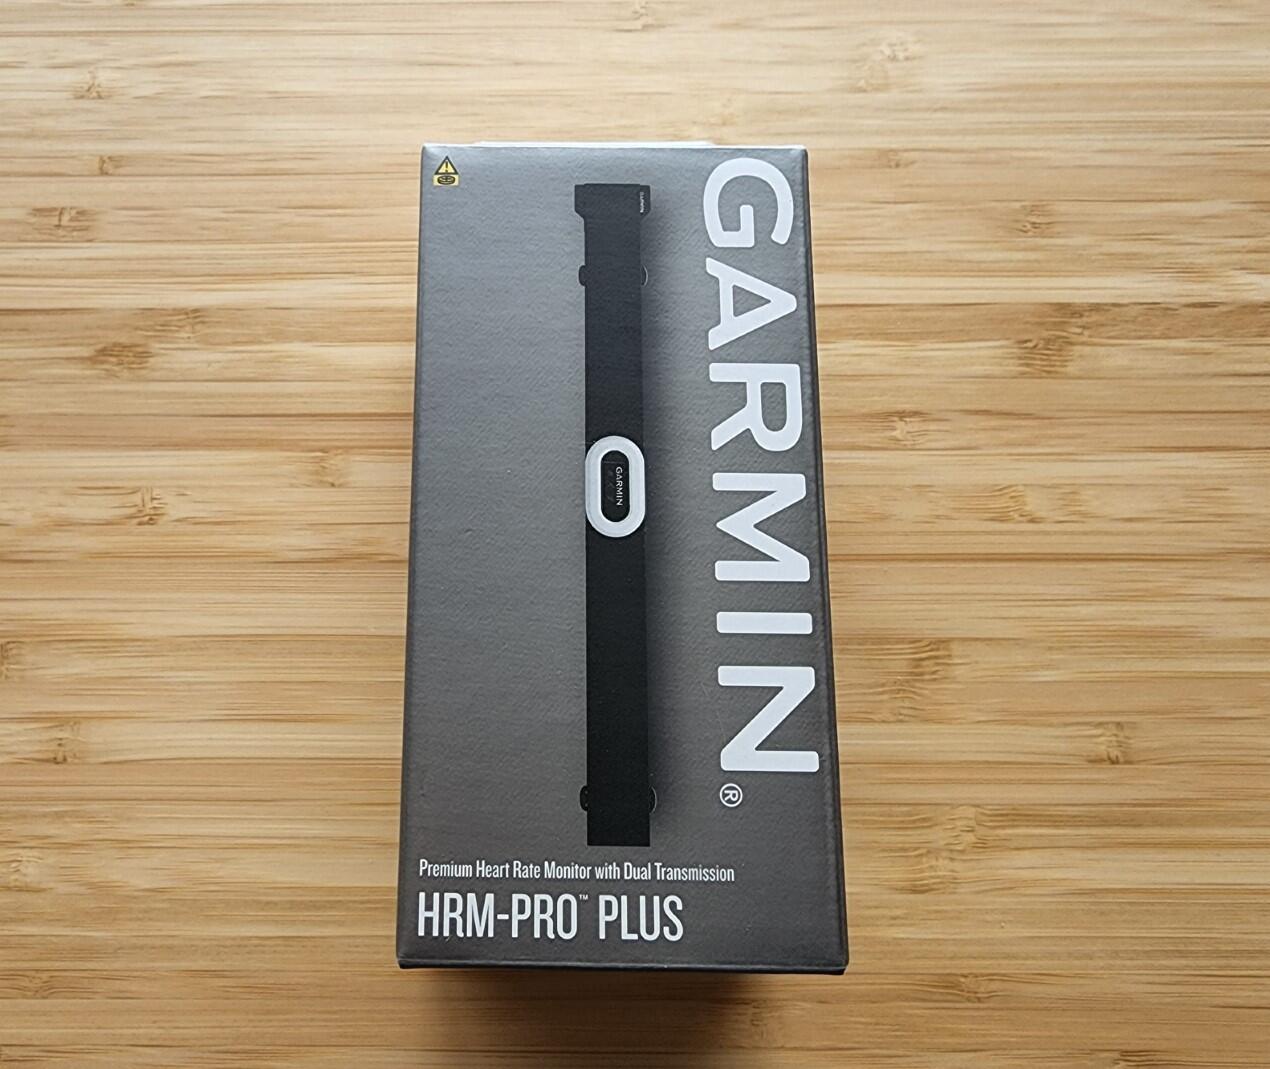 Garmin HRM-Pro Plus review: One very handy design update, same price